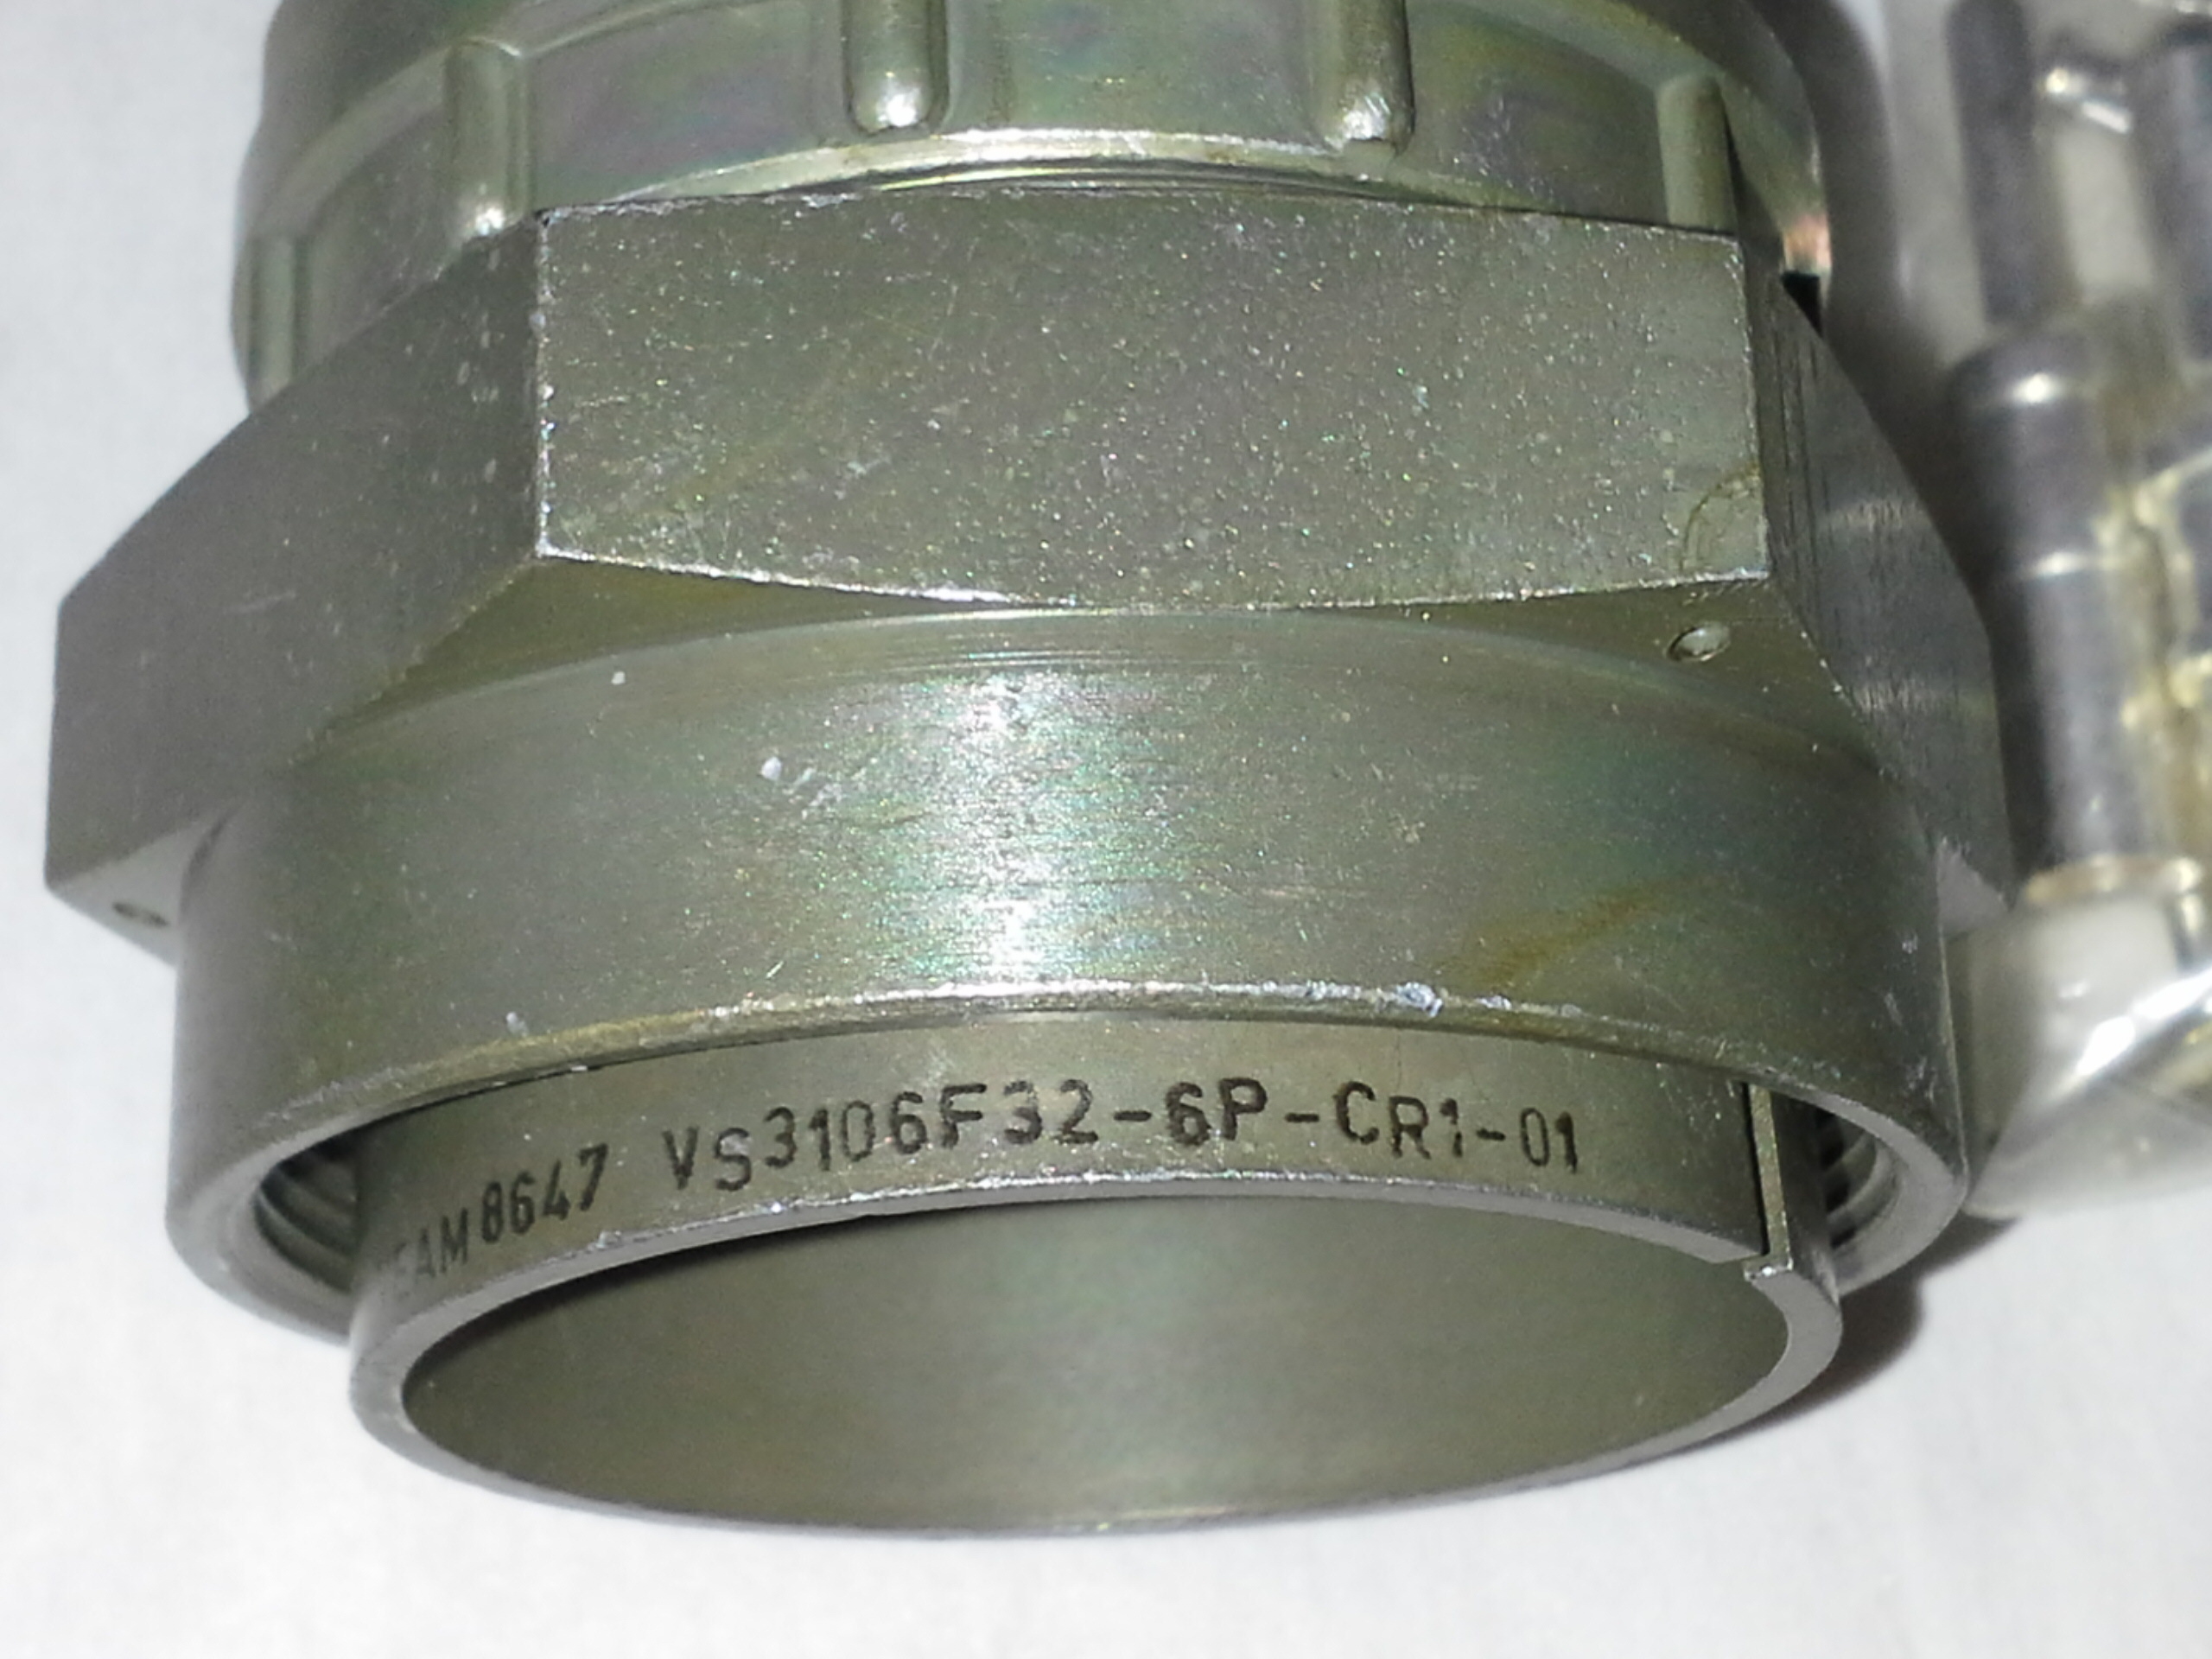 Milit. Silbersteckverbinder VS3106F32-6P-CR1-01